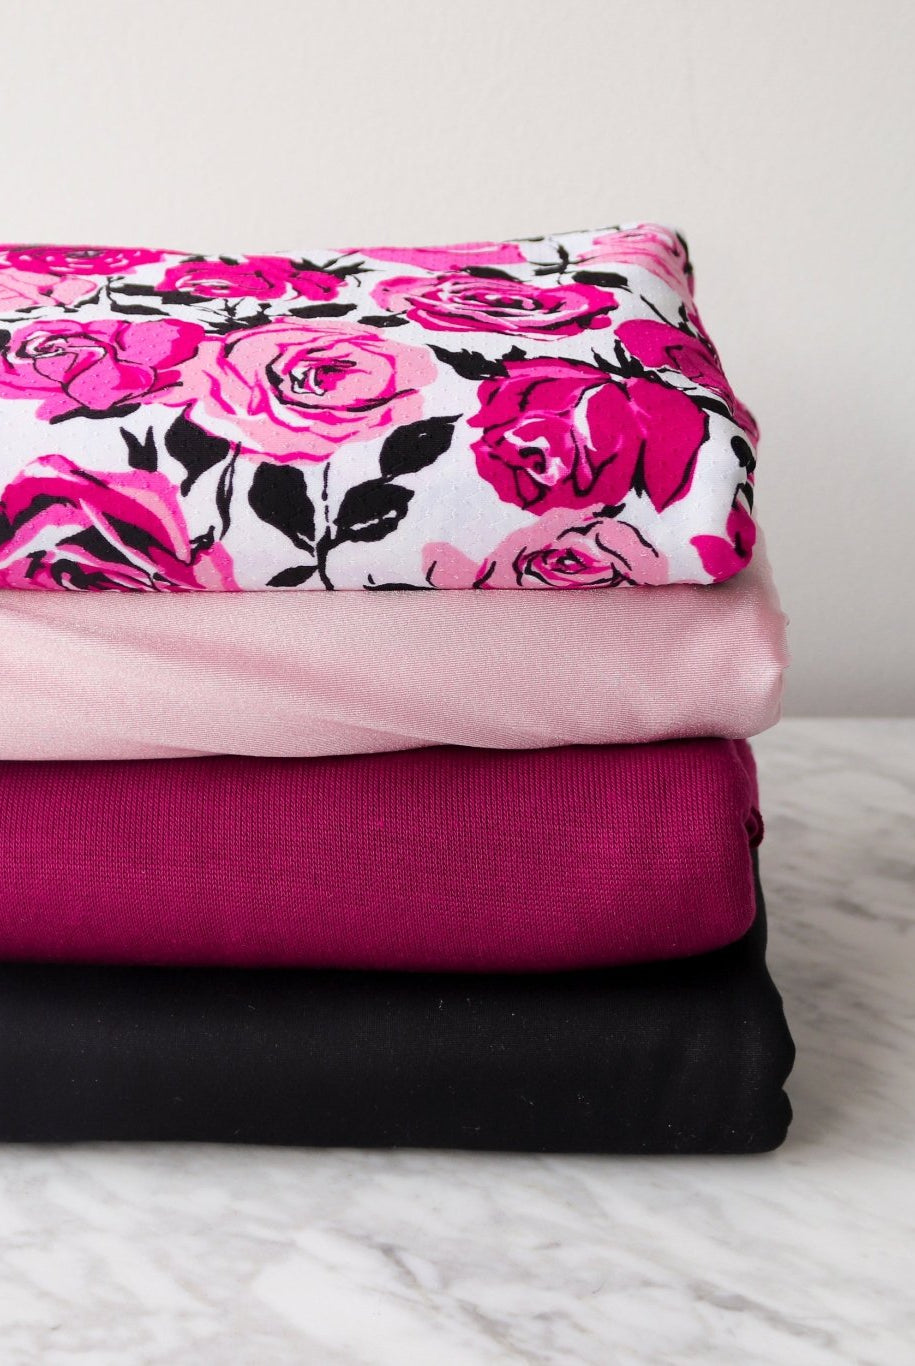 04/08/2024 Fabric Happy Hour! Fuchsia Rose, Knit Bundle. Ready to Ship! - Boho Fabrics - Fabric Bundles